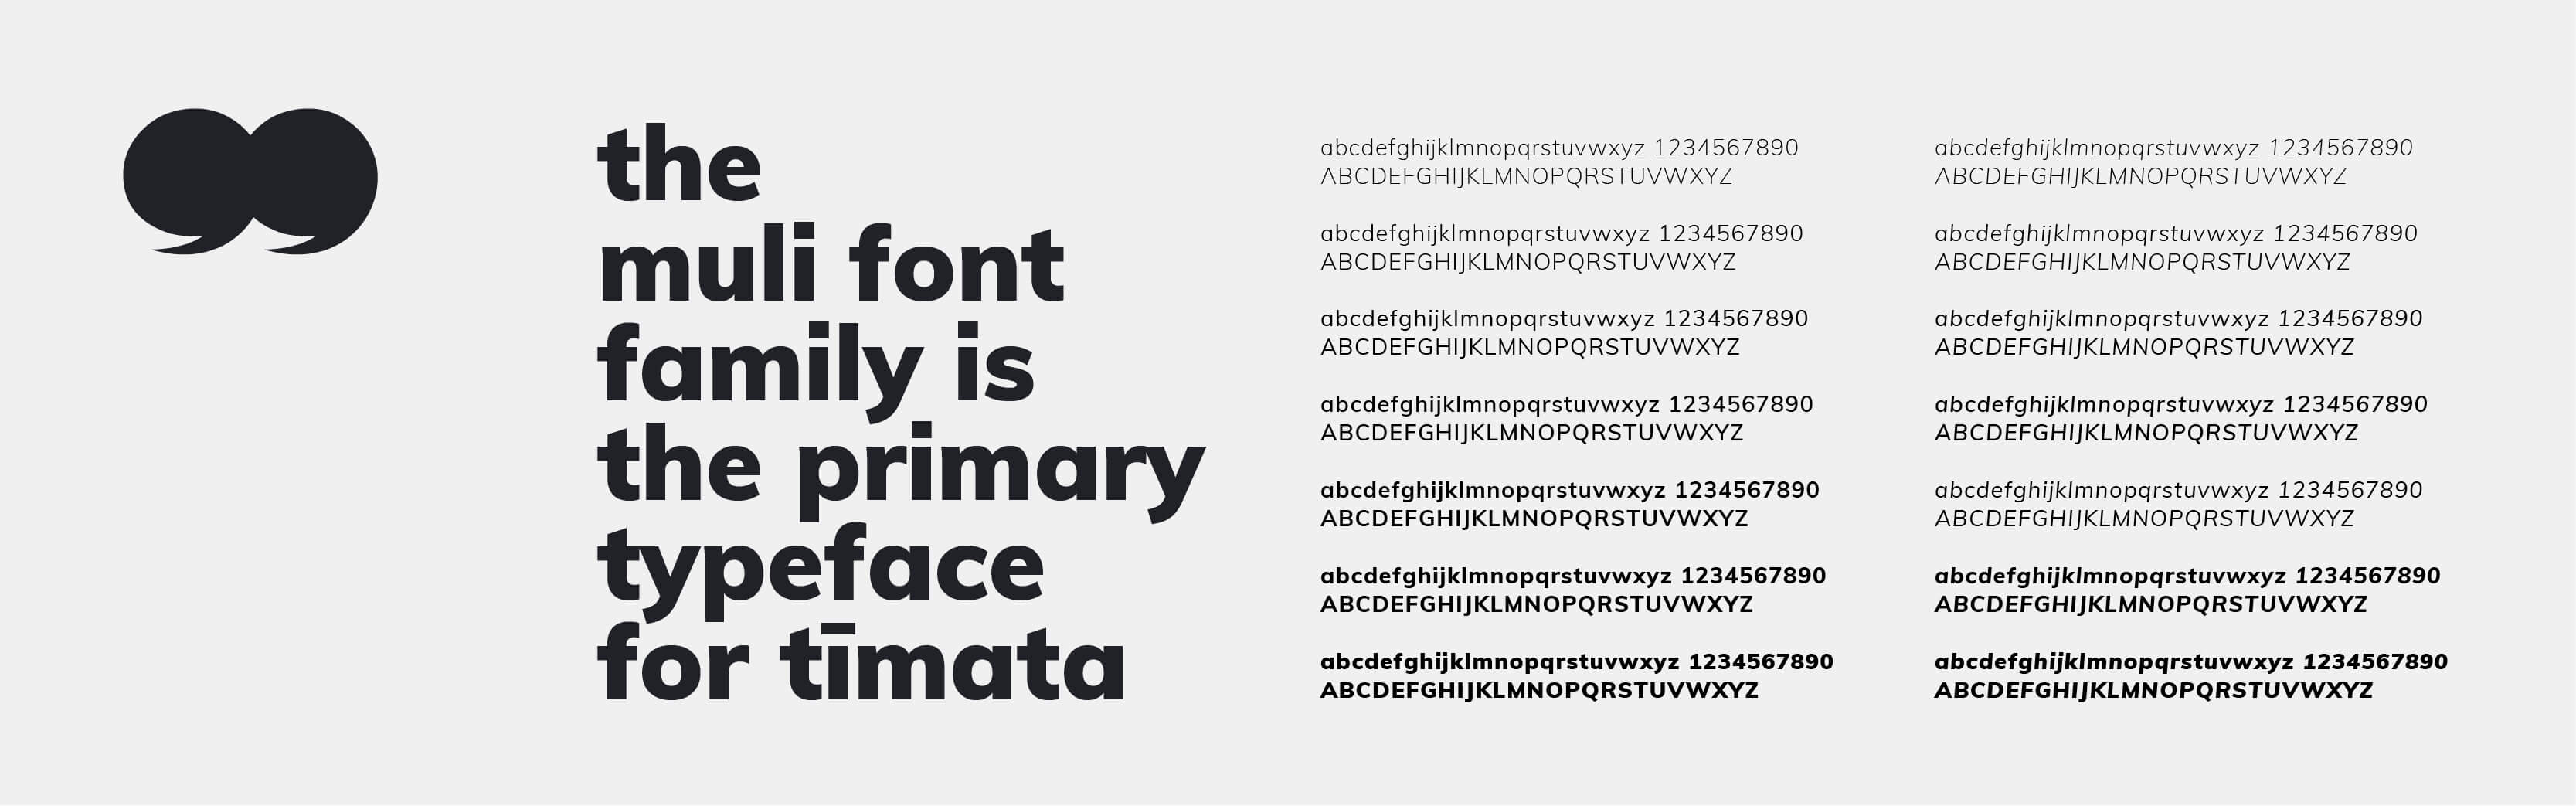 Timata typography